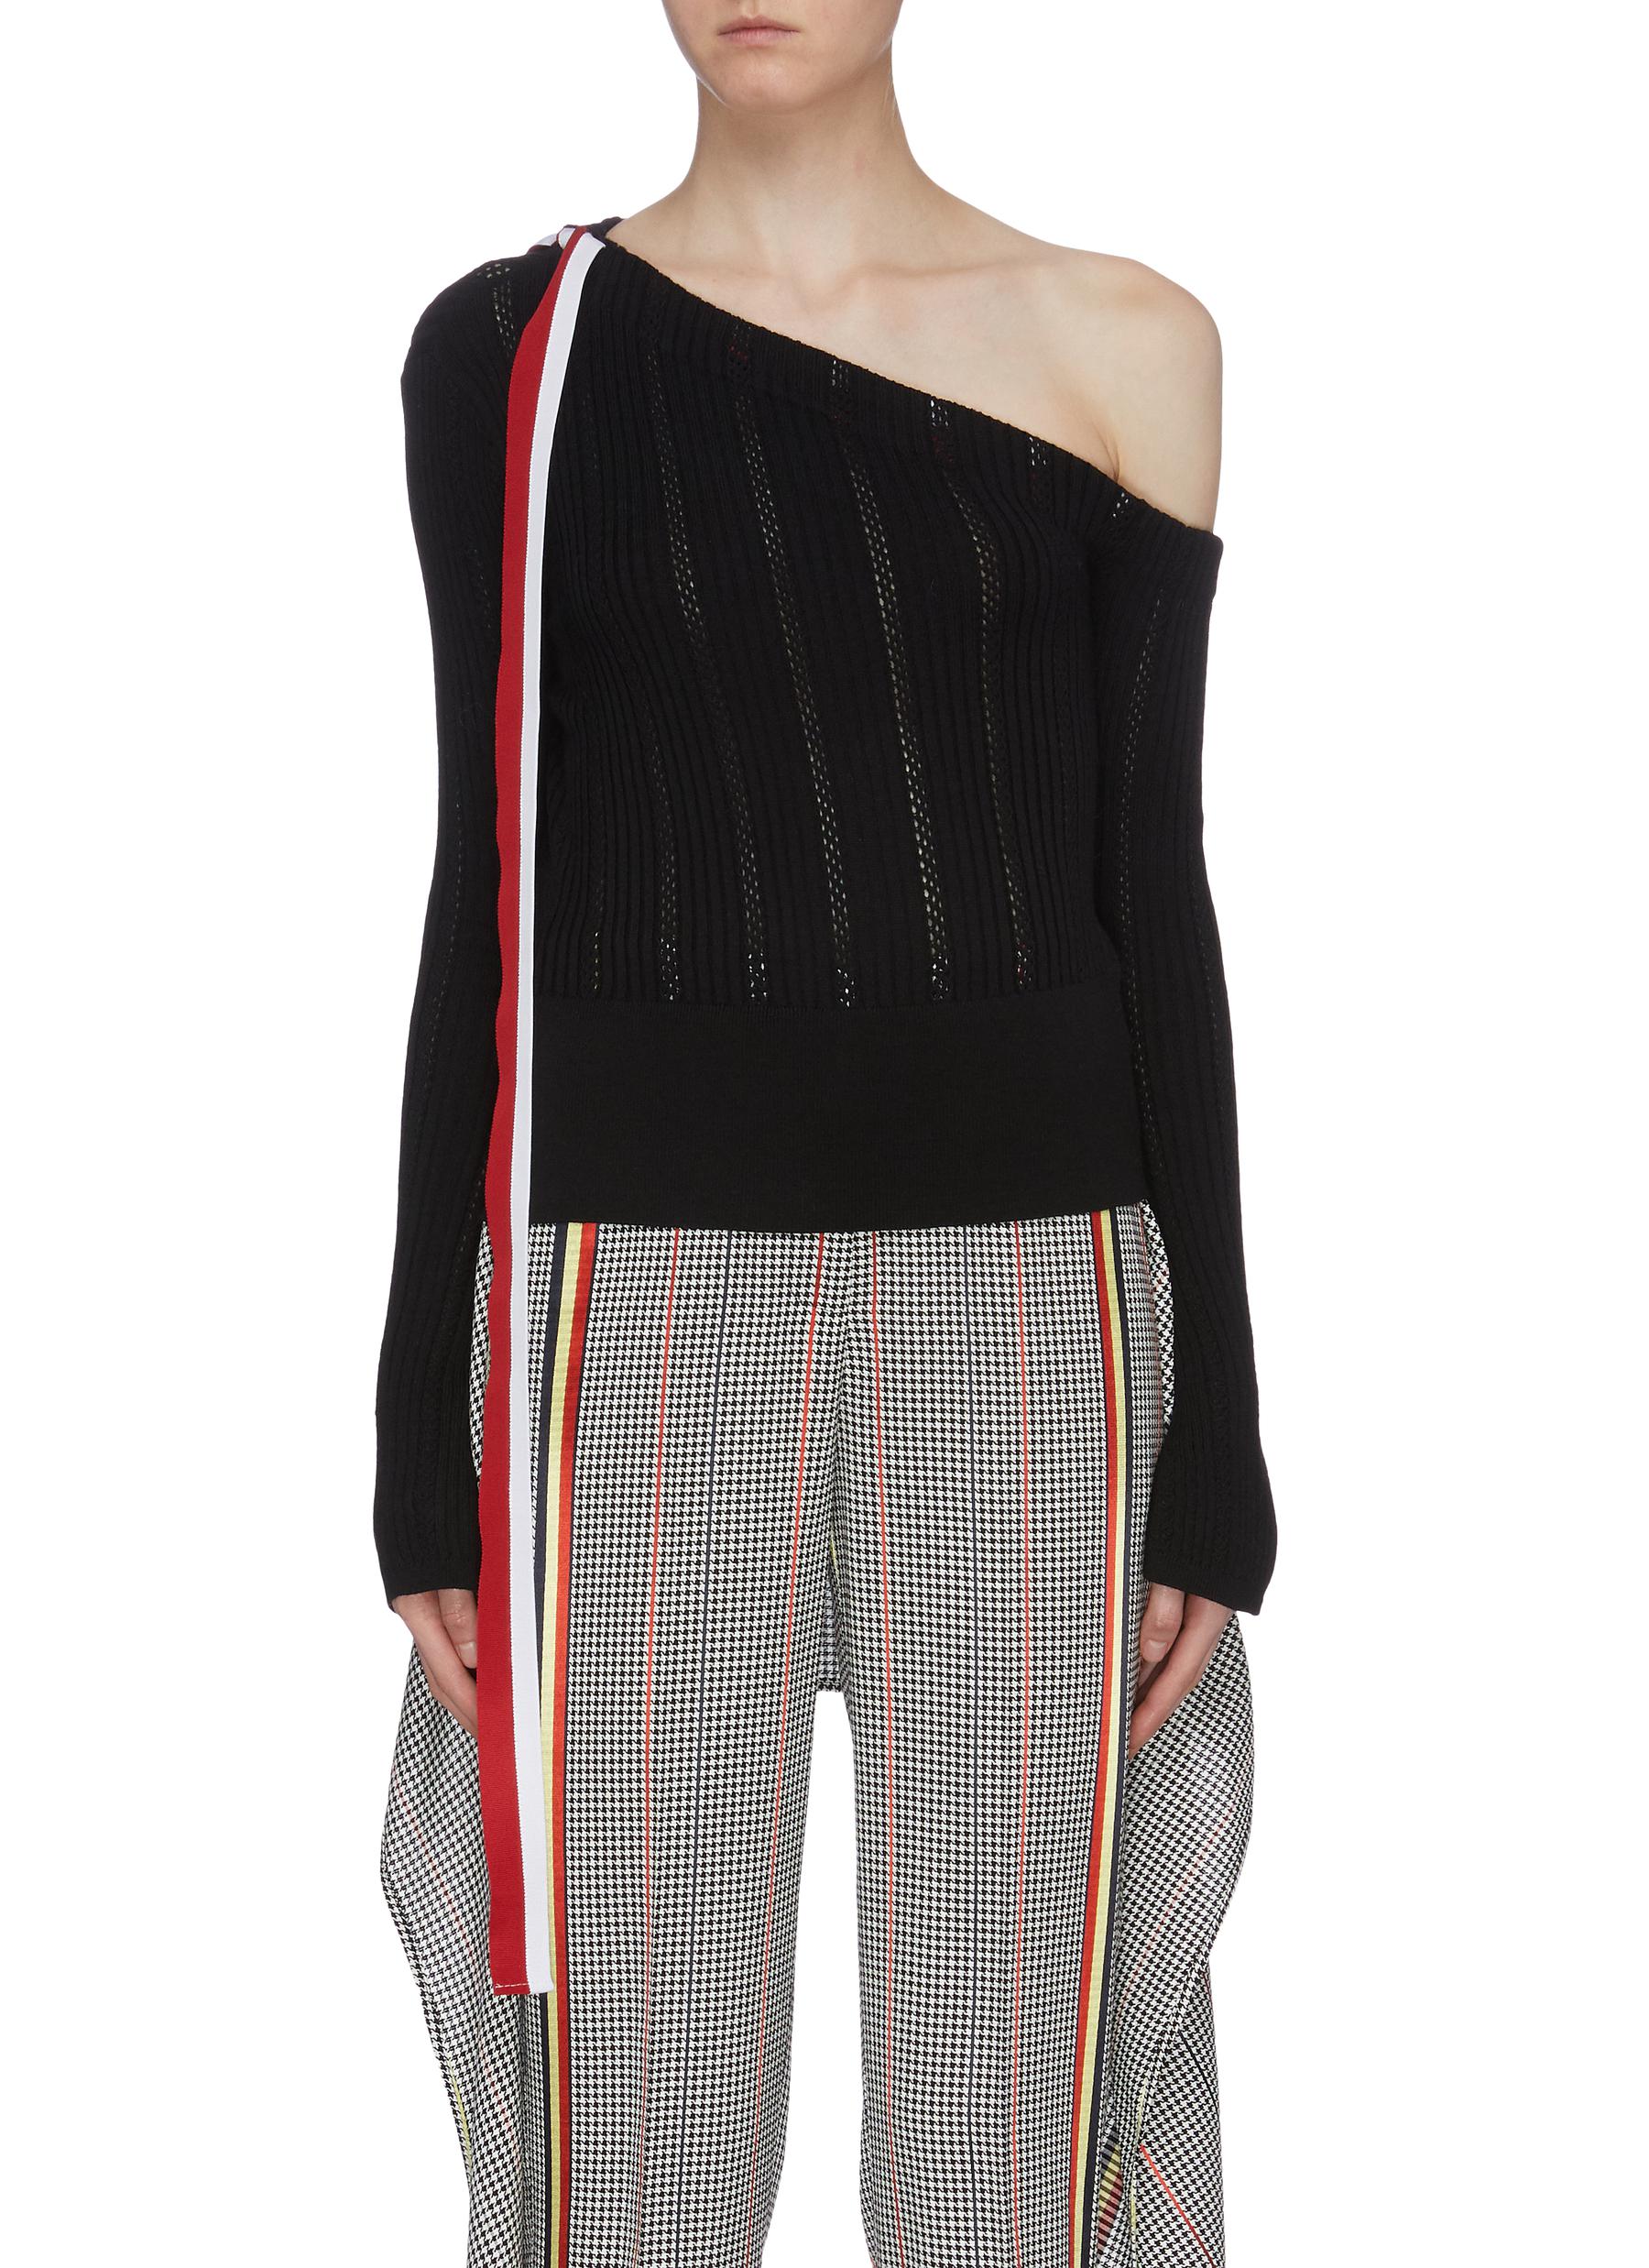 Nadege stripe one-shoulder knit top by Hellessy